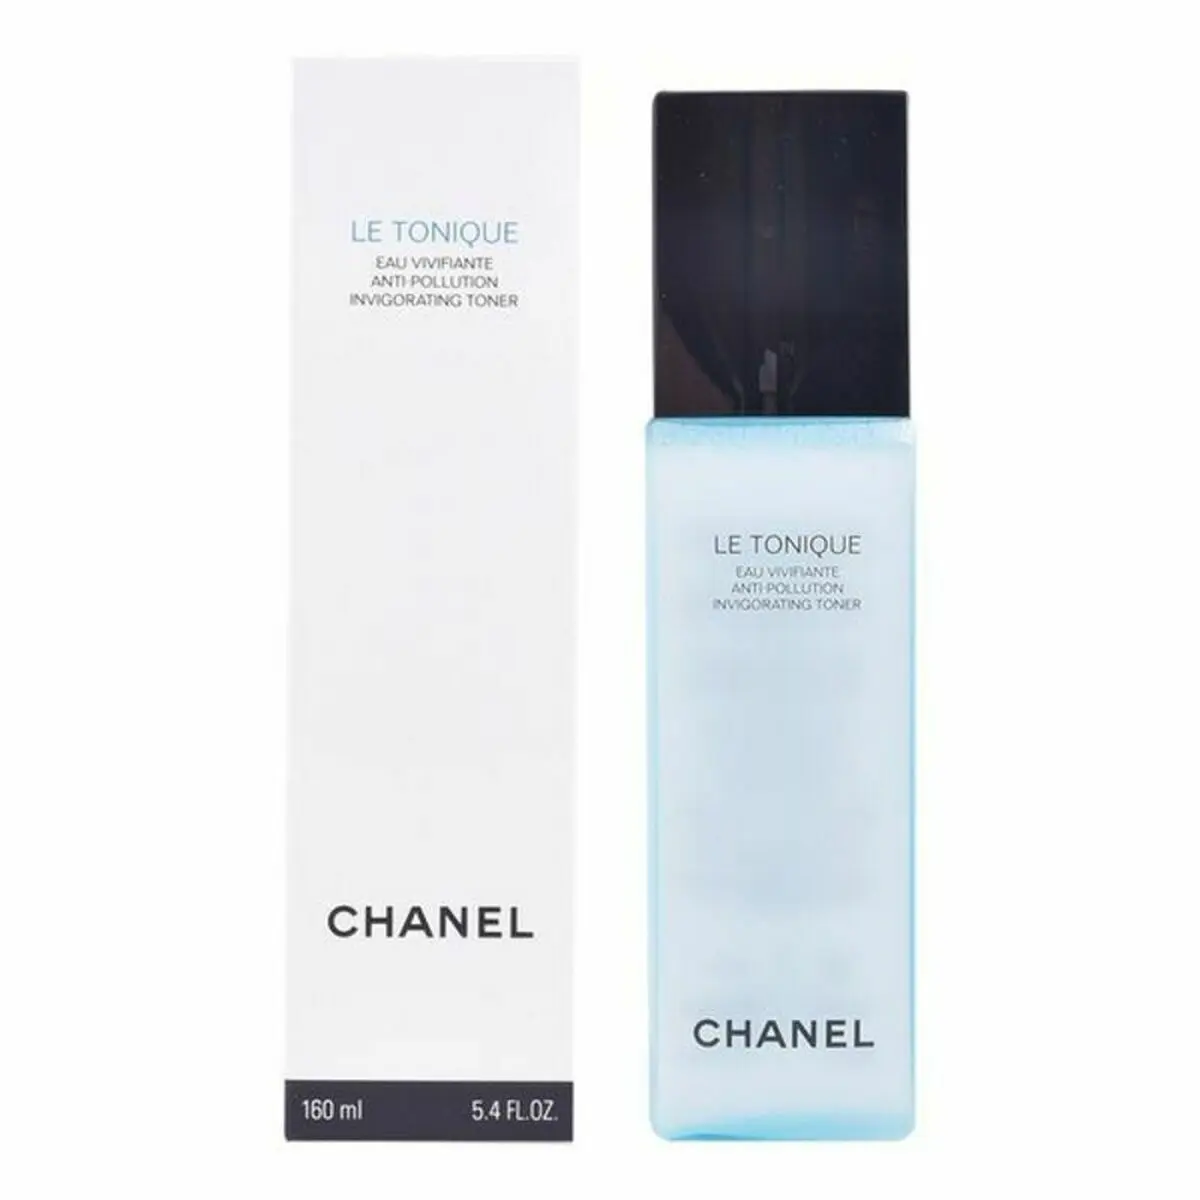 Tonico Viso Anti-pollution Chanel Kosmetik (160 ml)